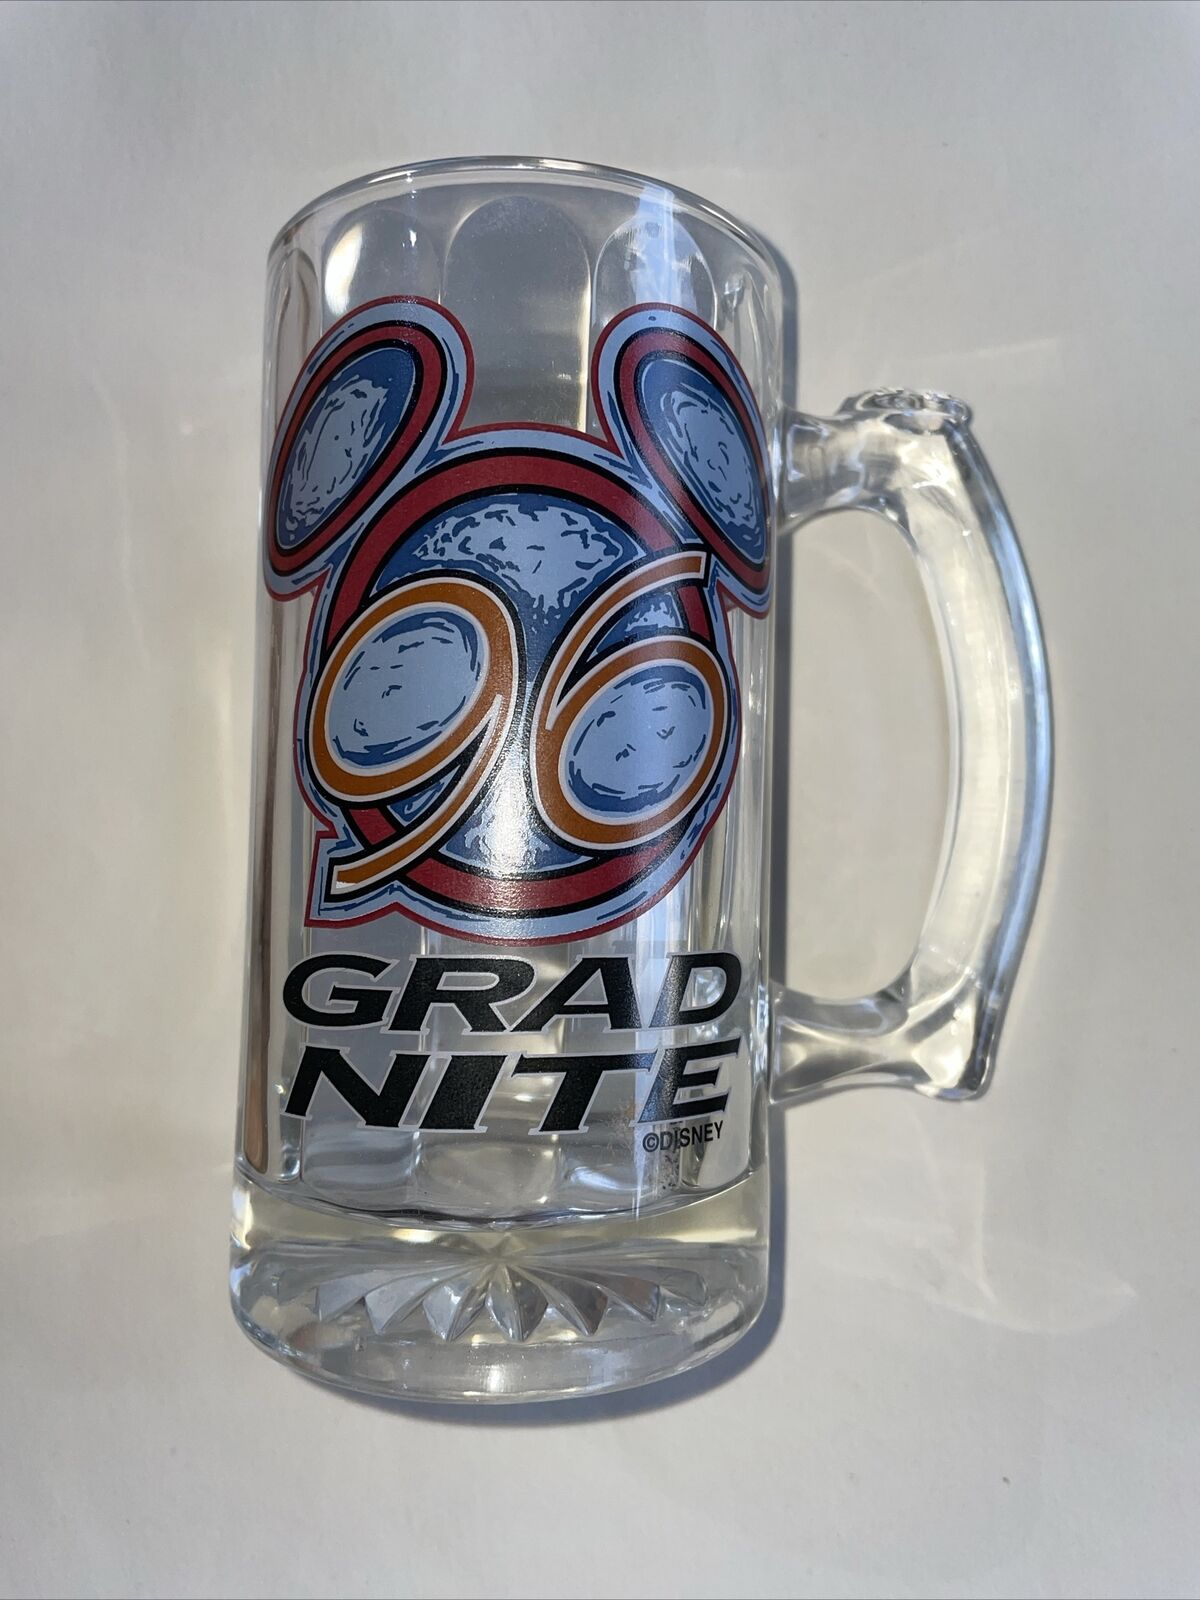 Vintage Disneyland HS Grad night 1996 glass mug